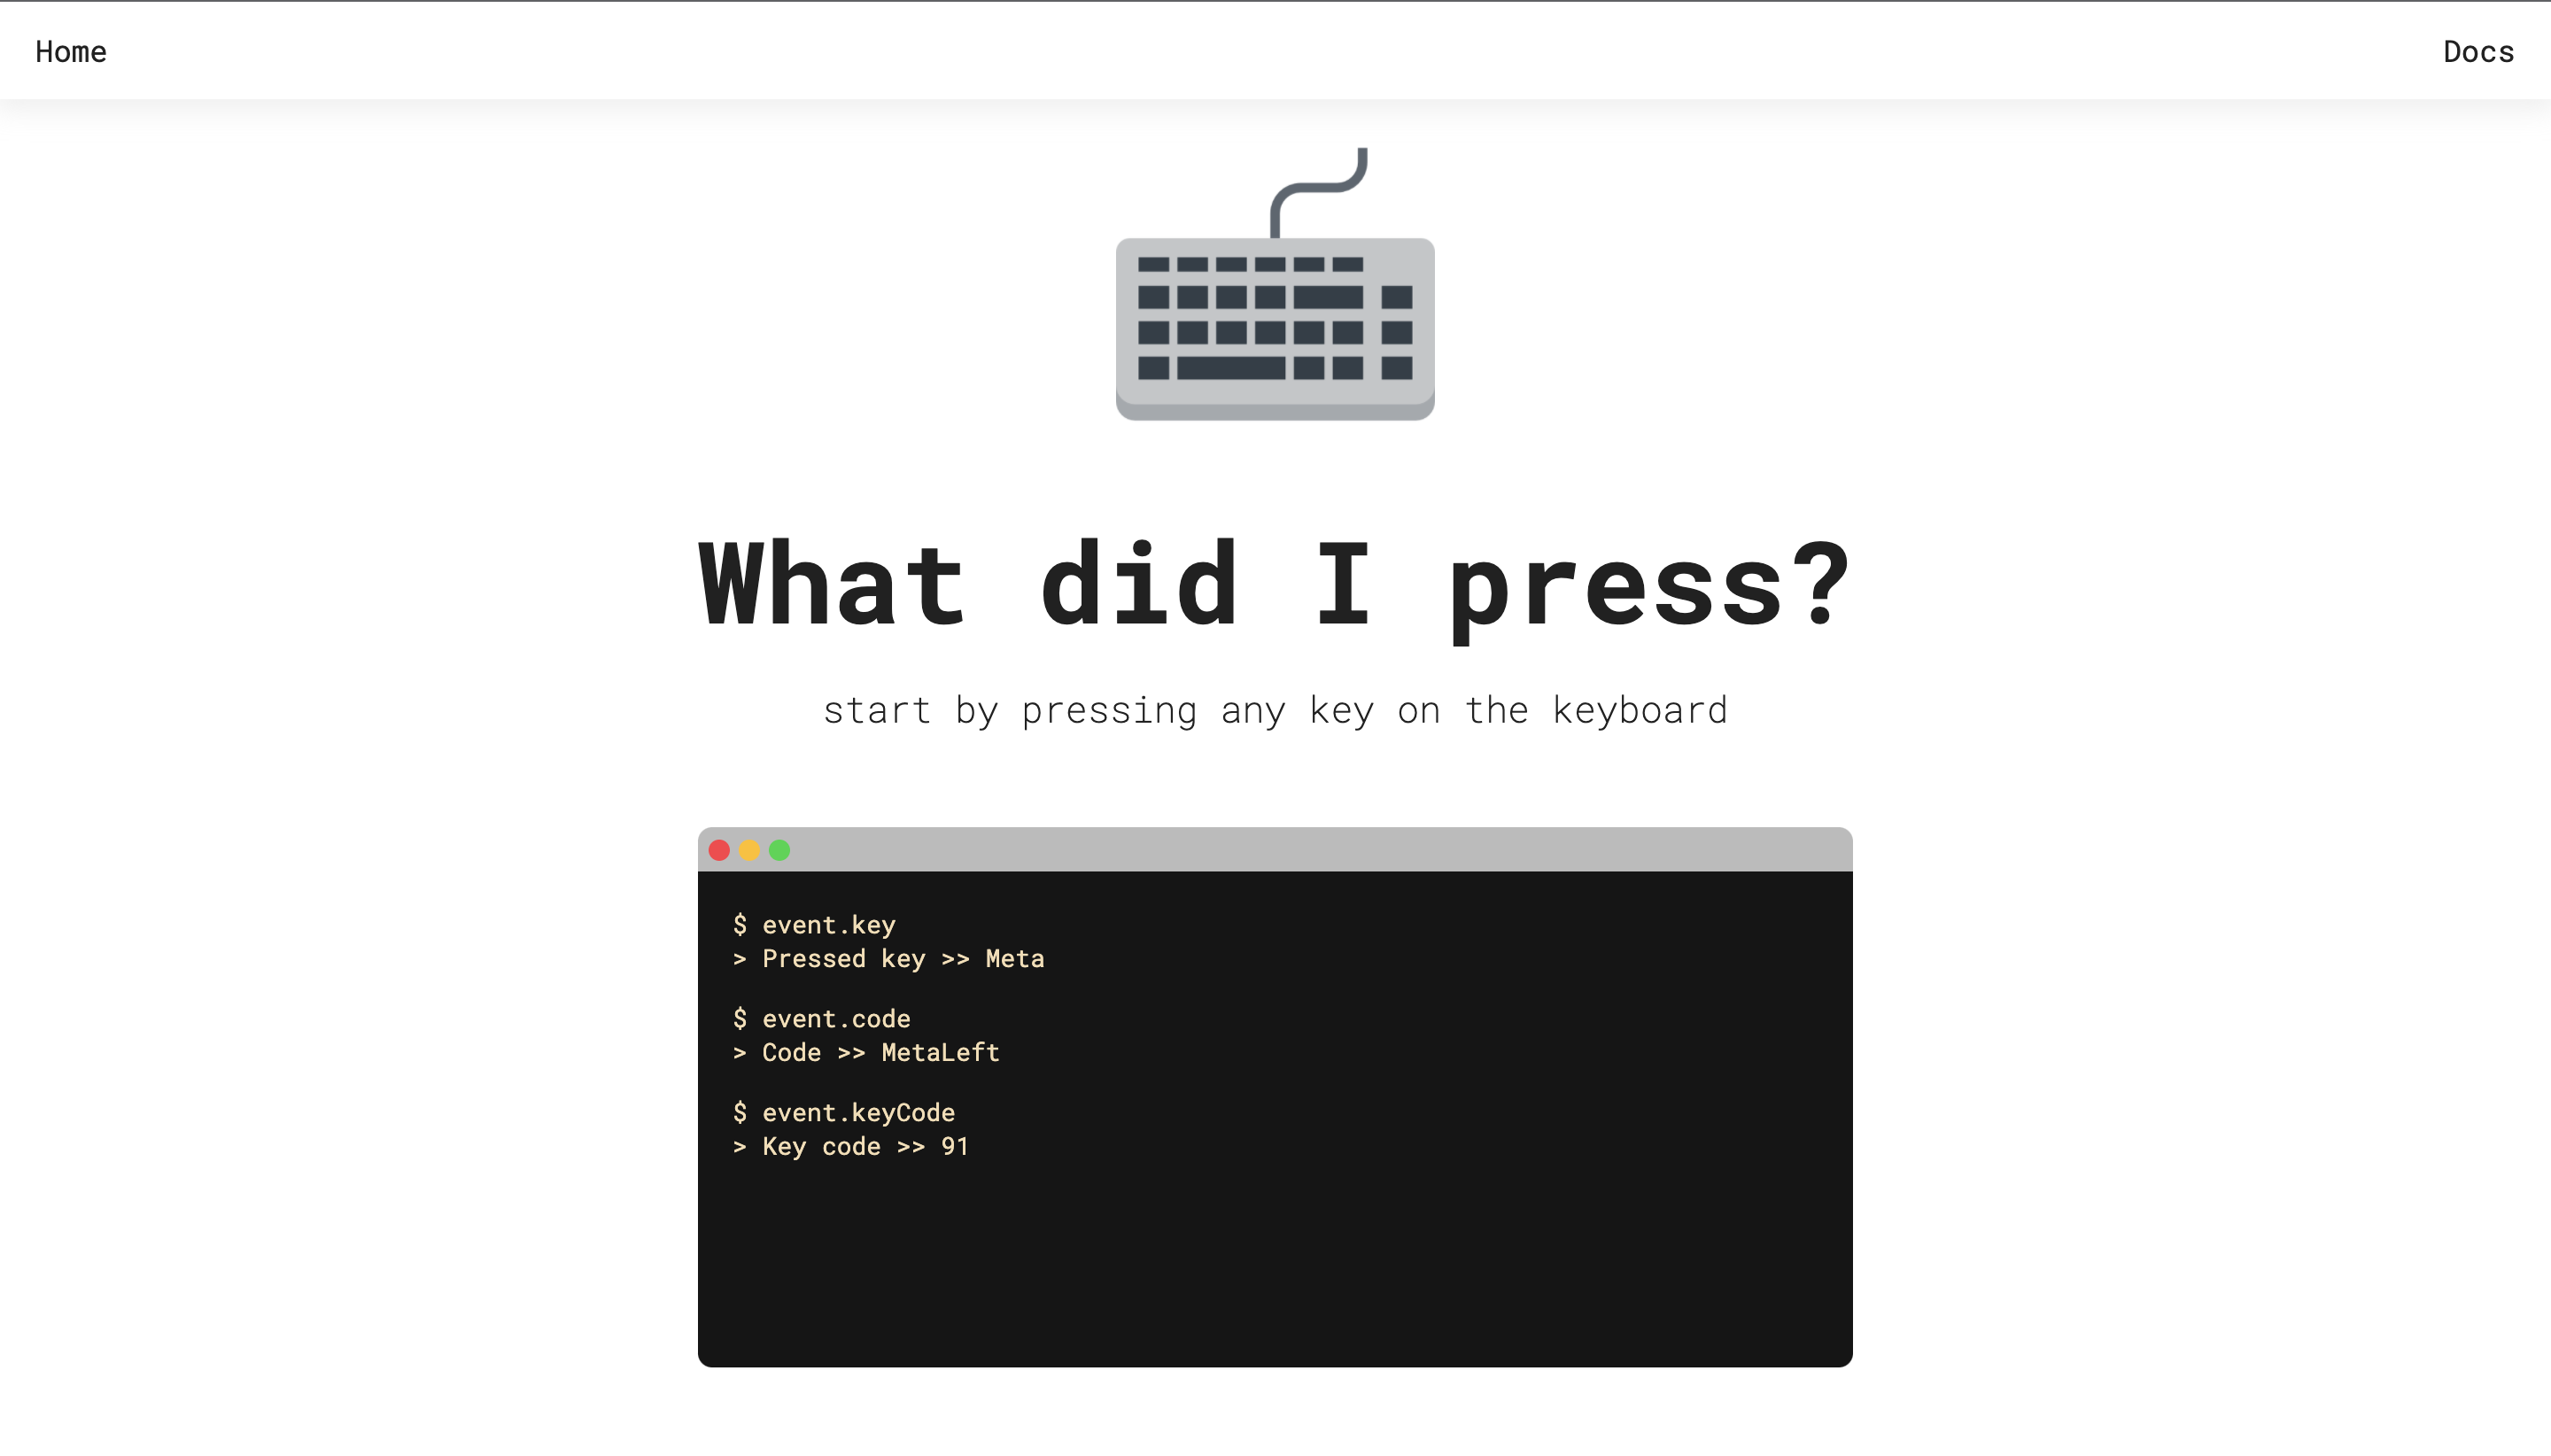 What did I press?